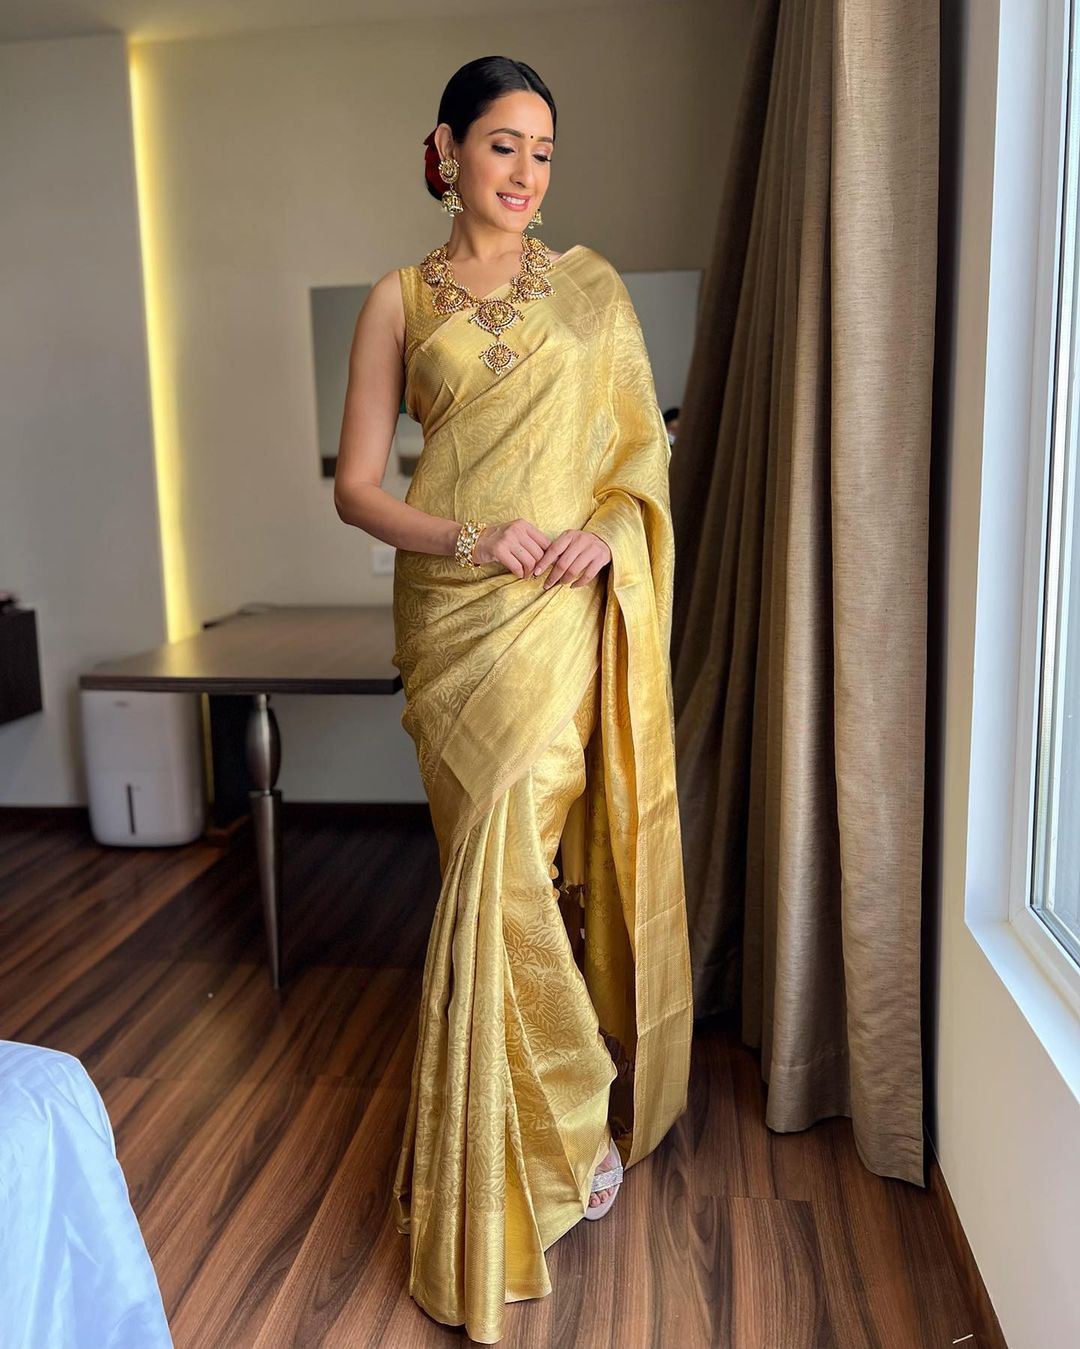 Pragya Jaiswal looks flawless in the golden silk saree